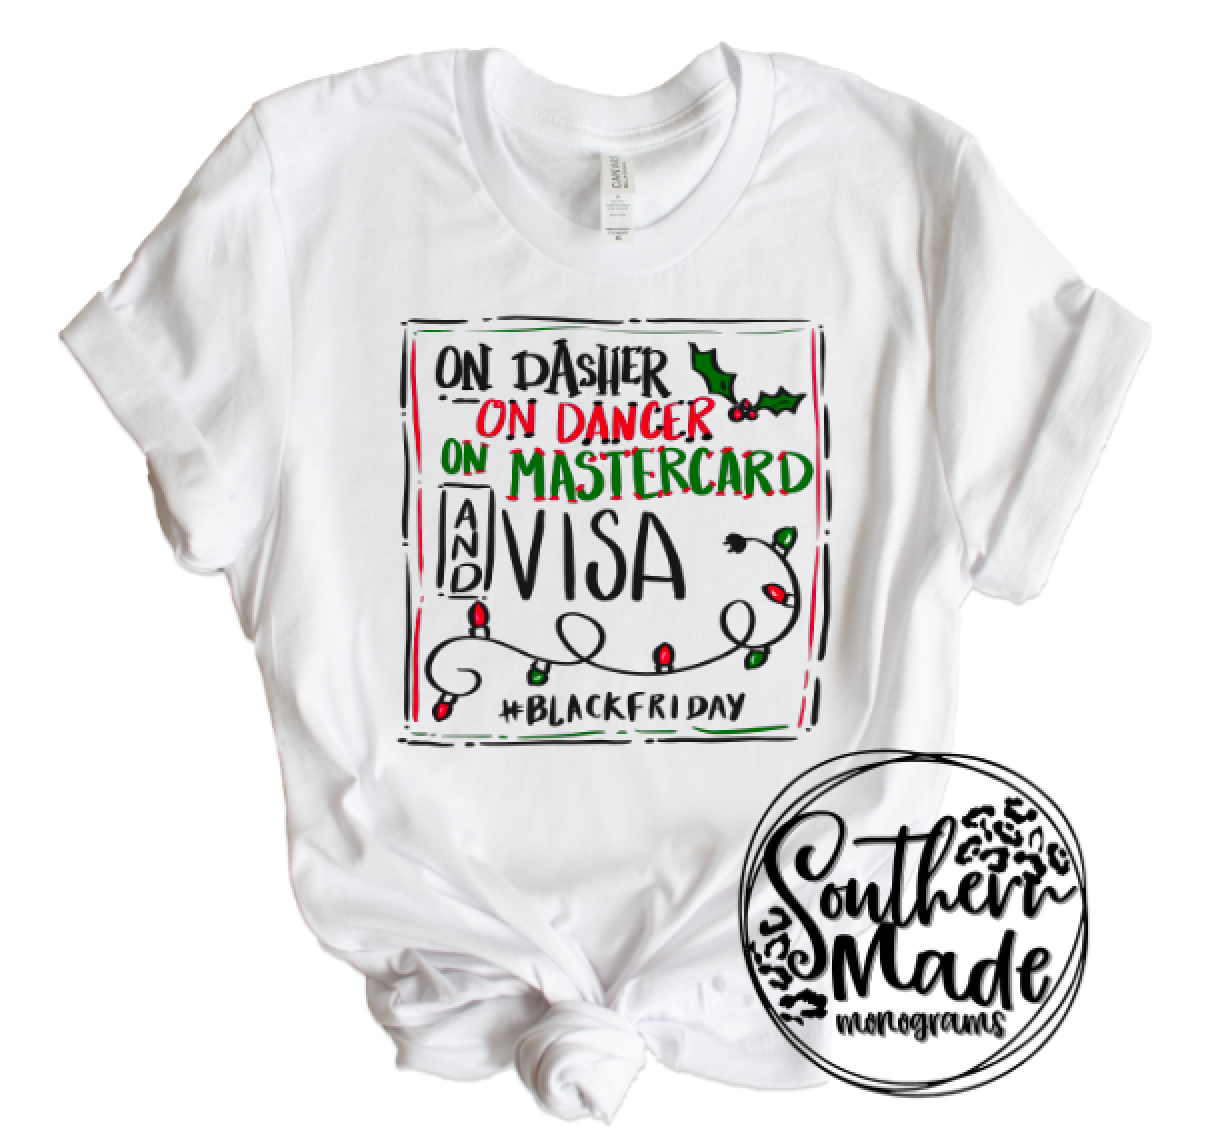 On Dasher, On Dancer, On Mastercard And Visa - Black Friday Shirt